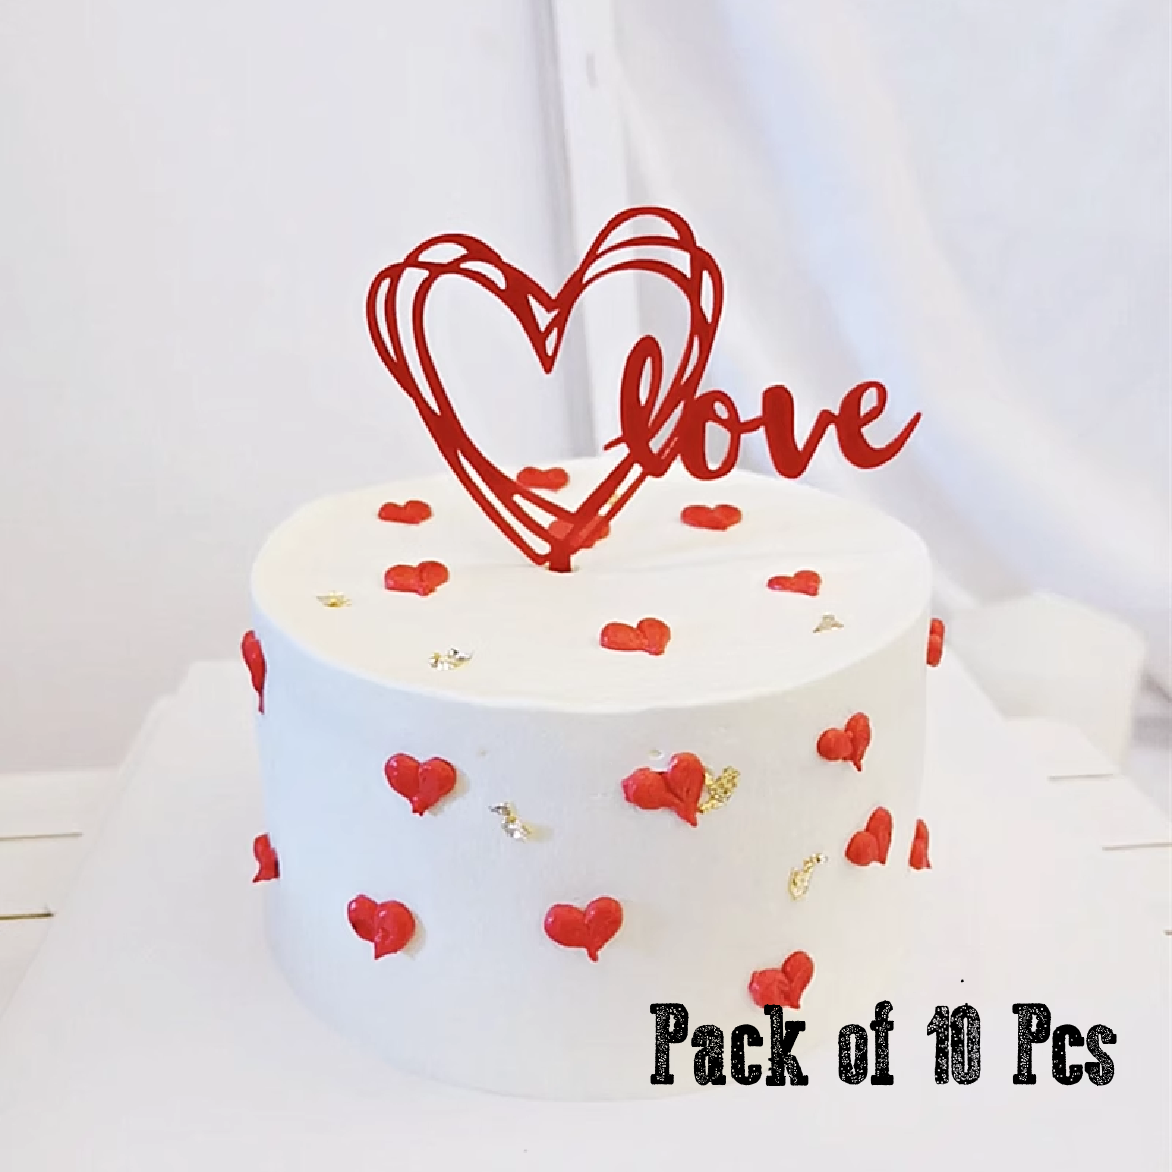 Cake Decoration, Cupcake Topper - Heart & Love Set - Red - Set of 10pcs